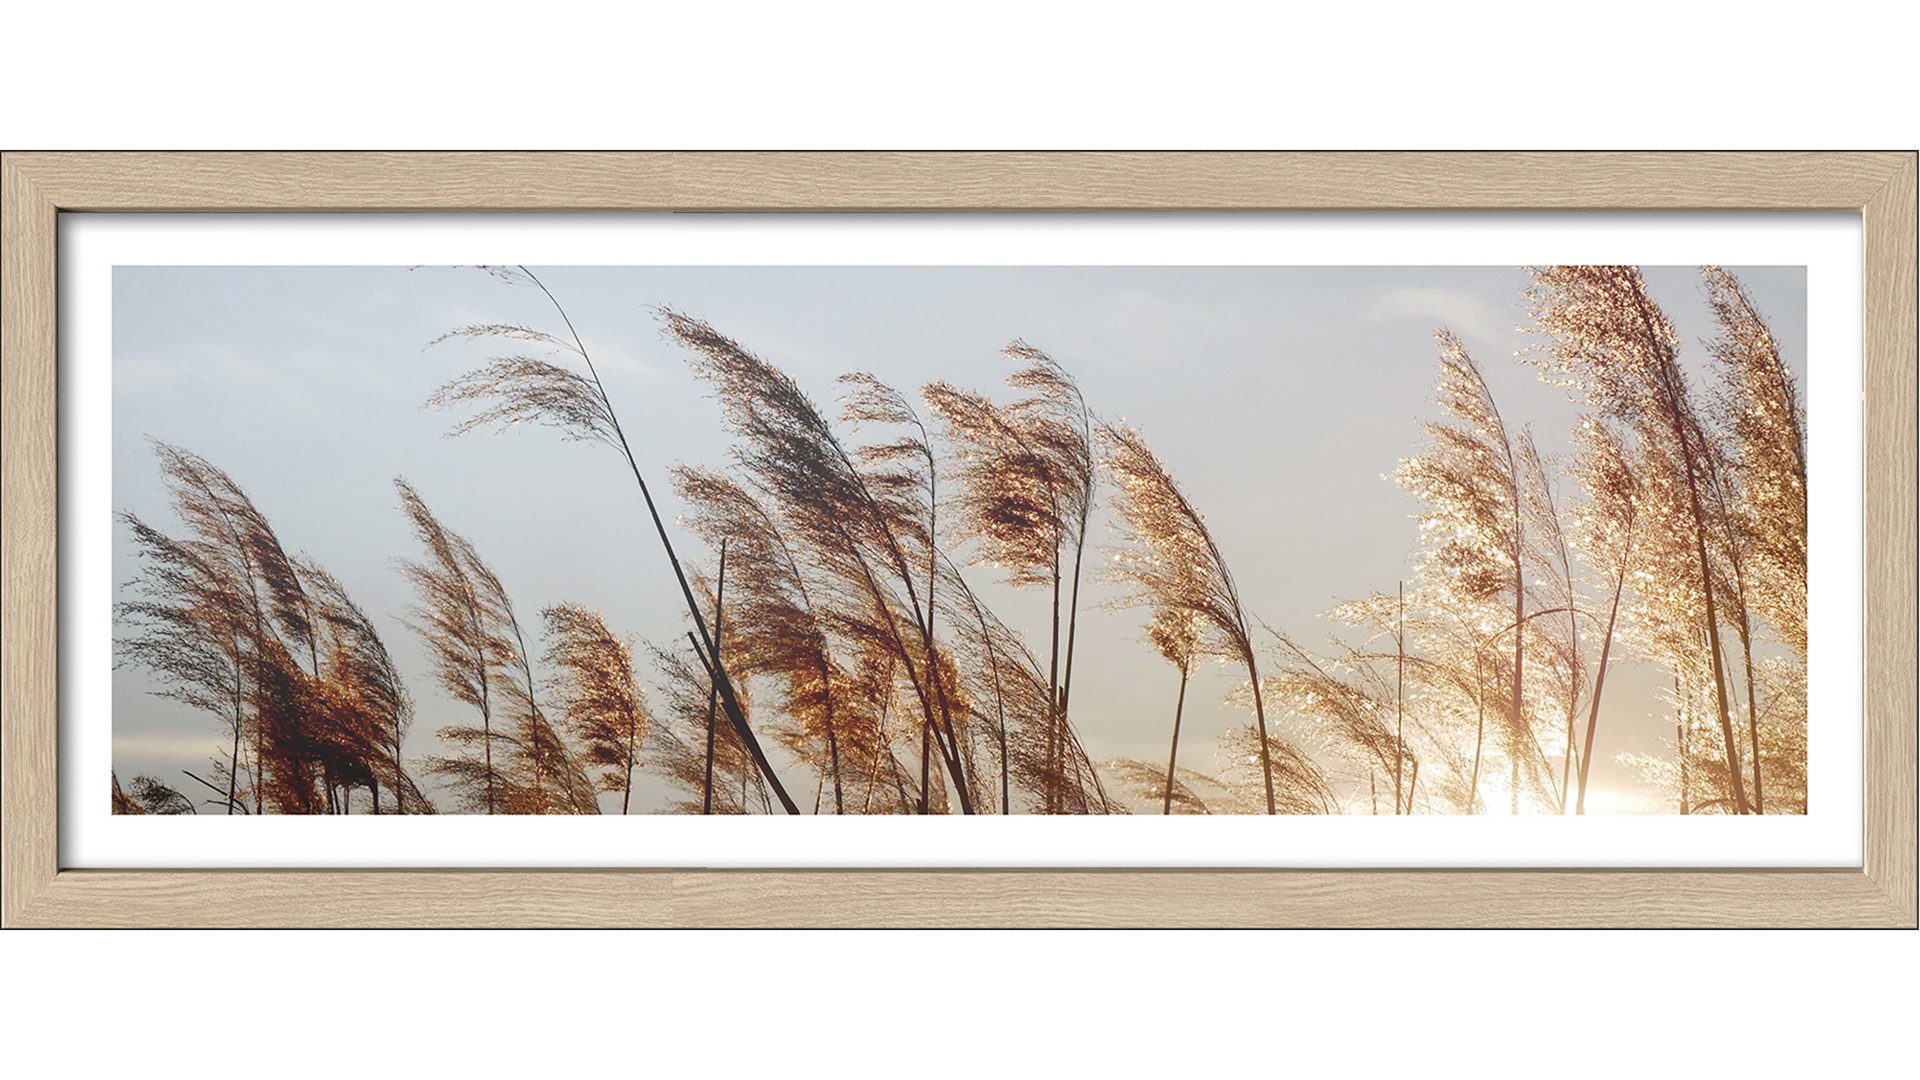 Kunstdruck Pro®art bilderpalette aus Karton / Papier / Pappe in Braun PRO®ART Kunstdruck Dried Fiber V Holzrahmen - ca. 85 x 35 cm